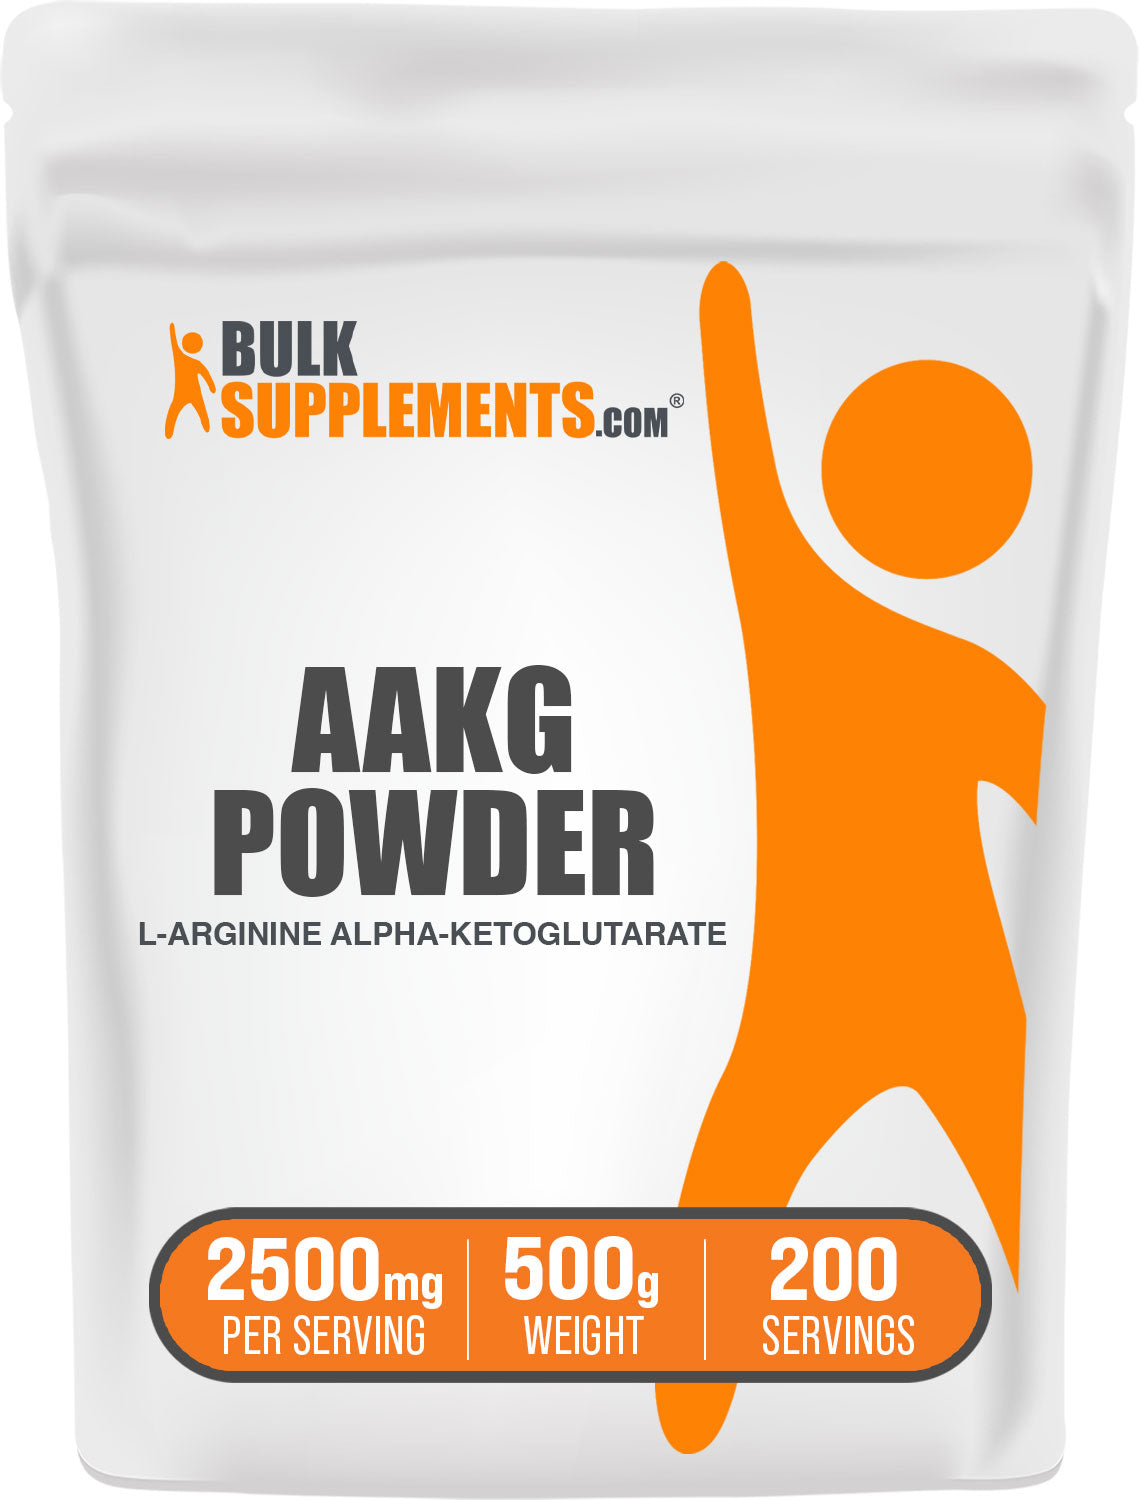 AAKG powder 500g bag